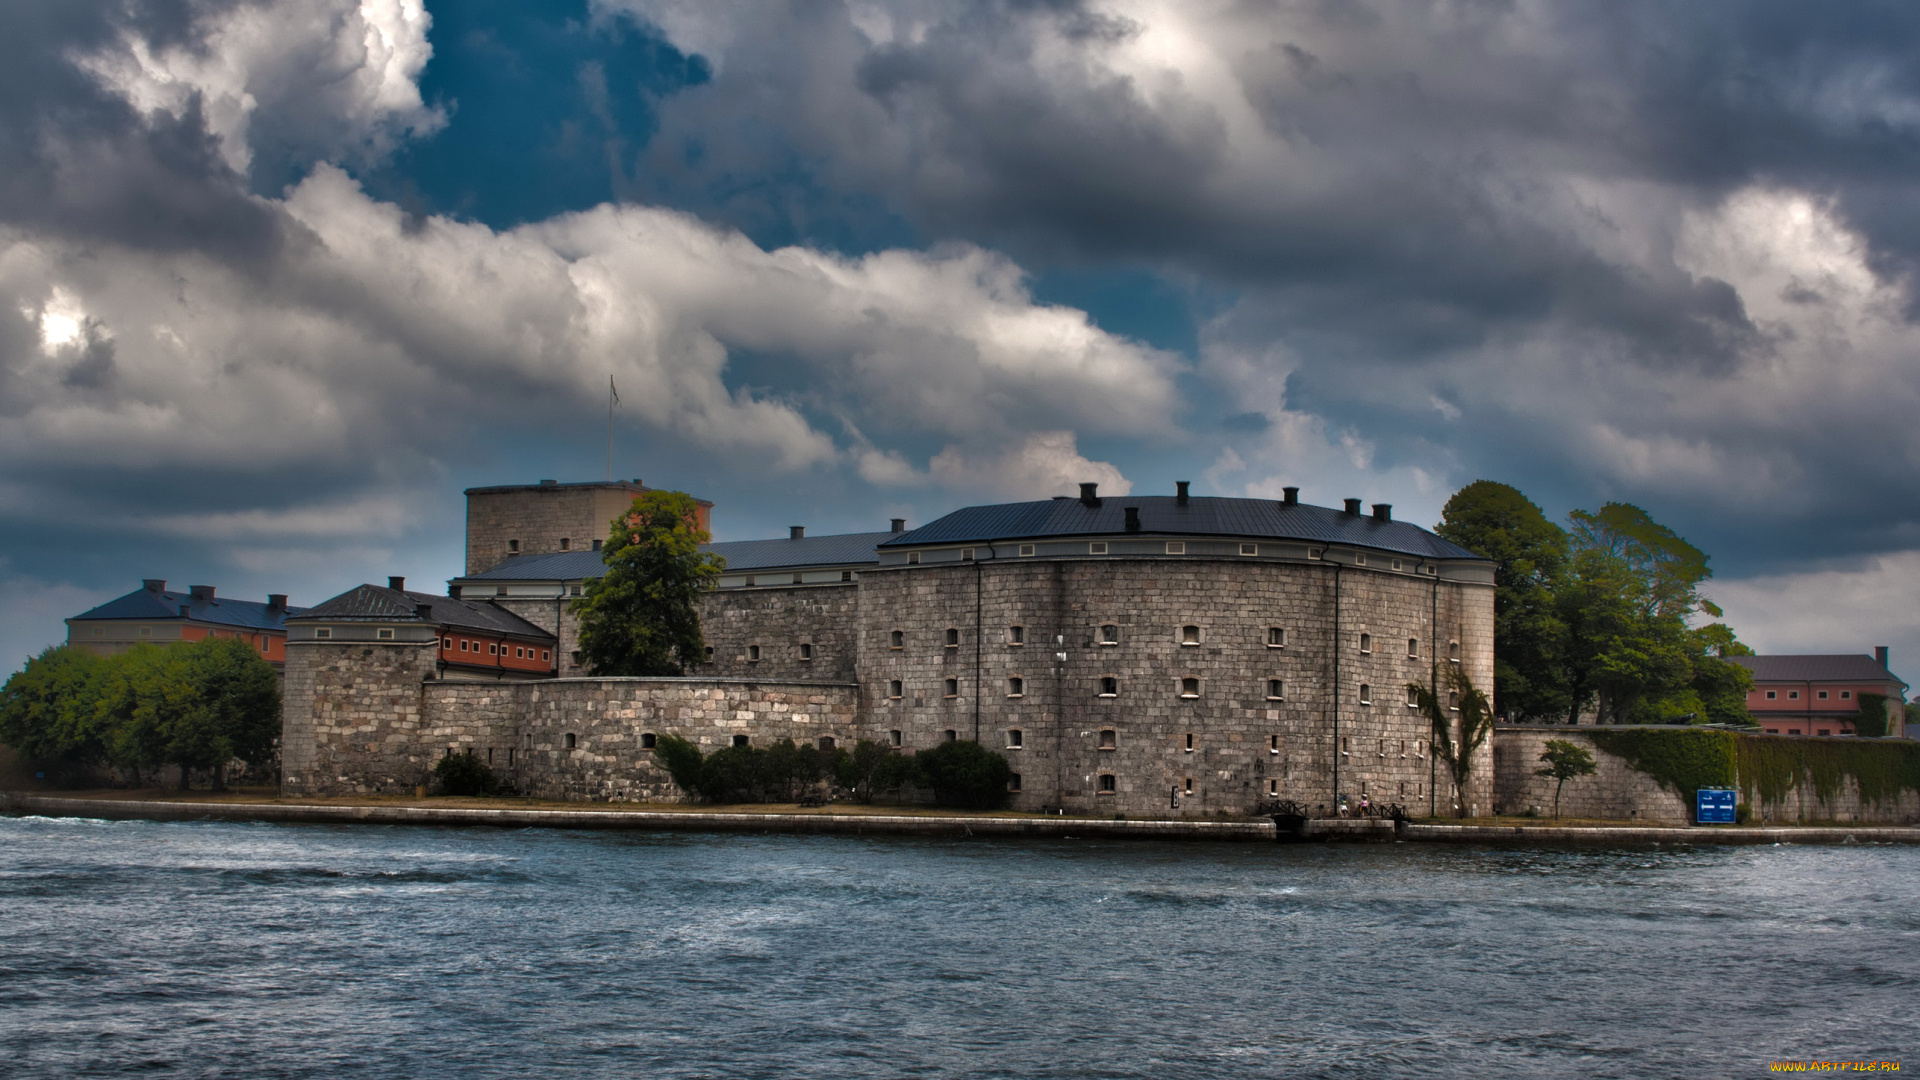 vaxholm, castle, швеция, города, дворцы, замки, крепости, облака, сумерки, река, замок